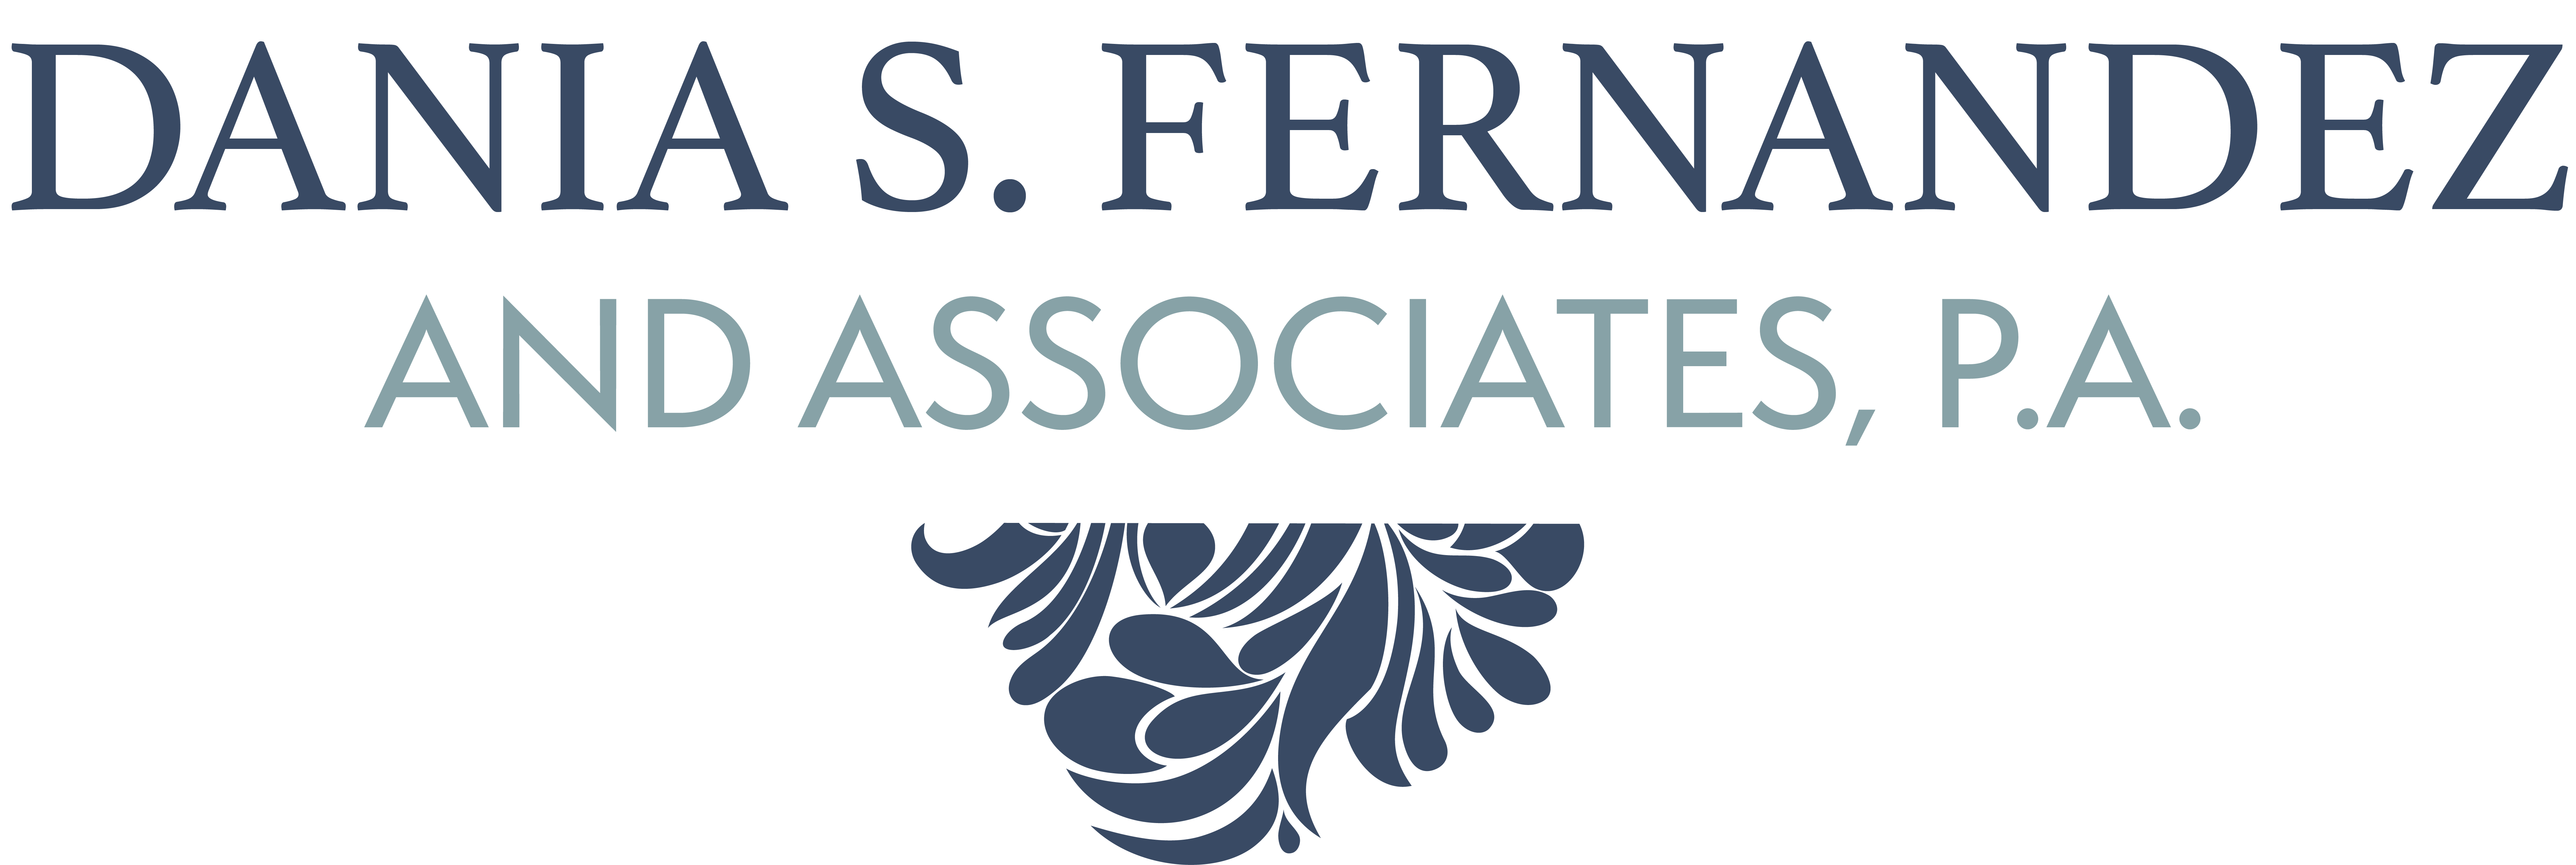 dania fernandez and associates, pa logo